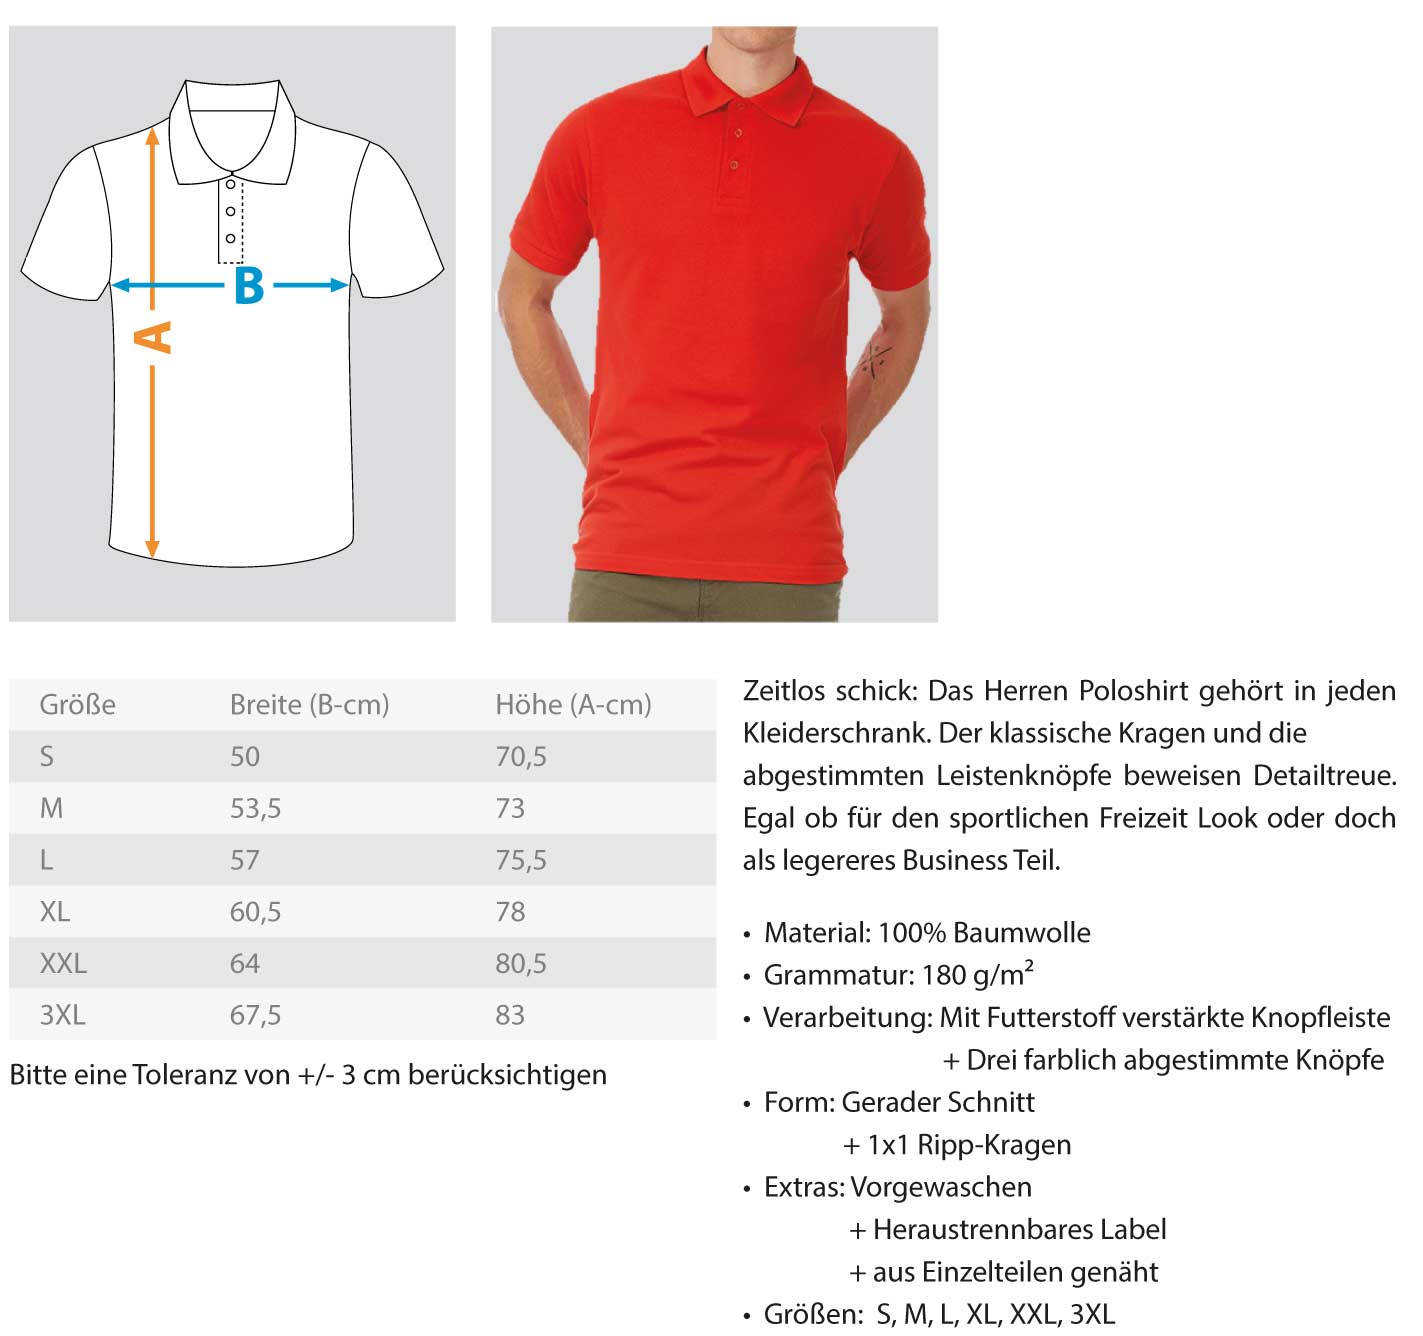 Gerüstbauer Skull  - Polo Shirt €29.95 Gerüstbauer - Shop >>